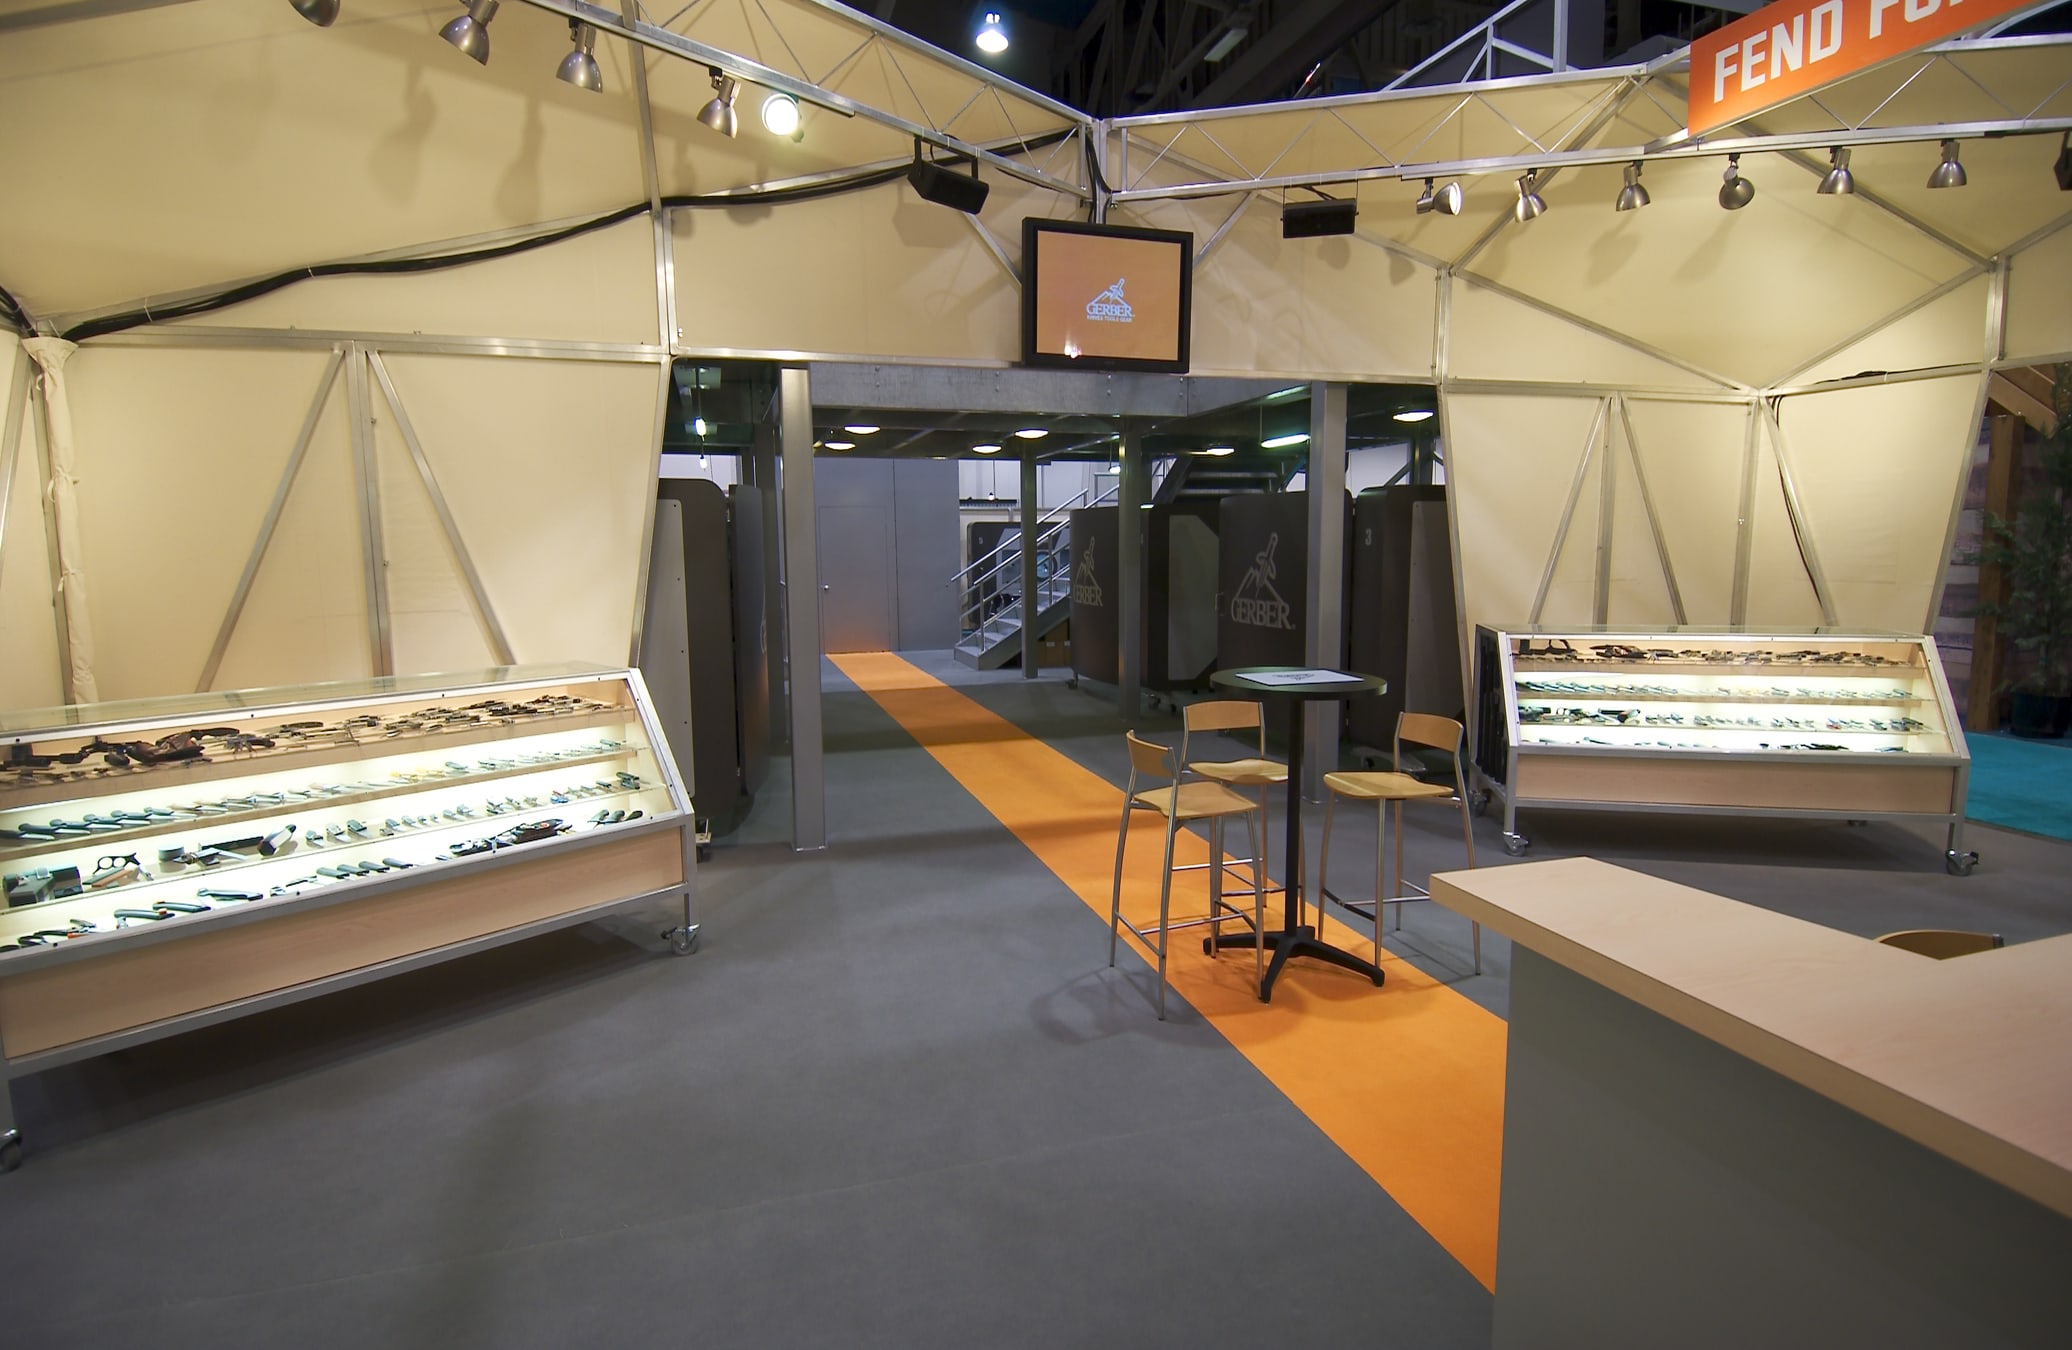 Gerber trade show exhibit design - inside view